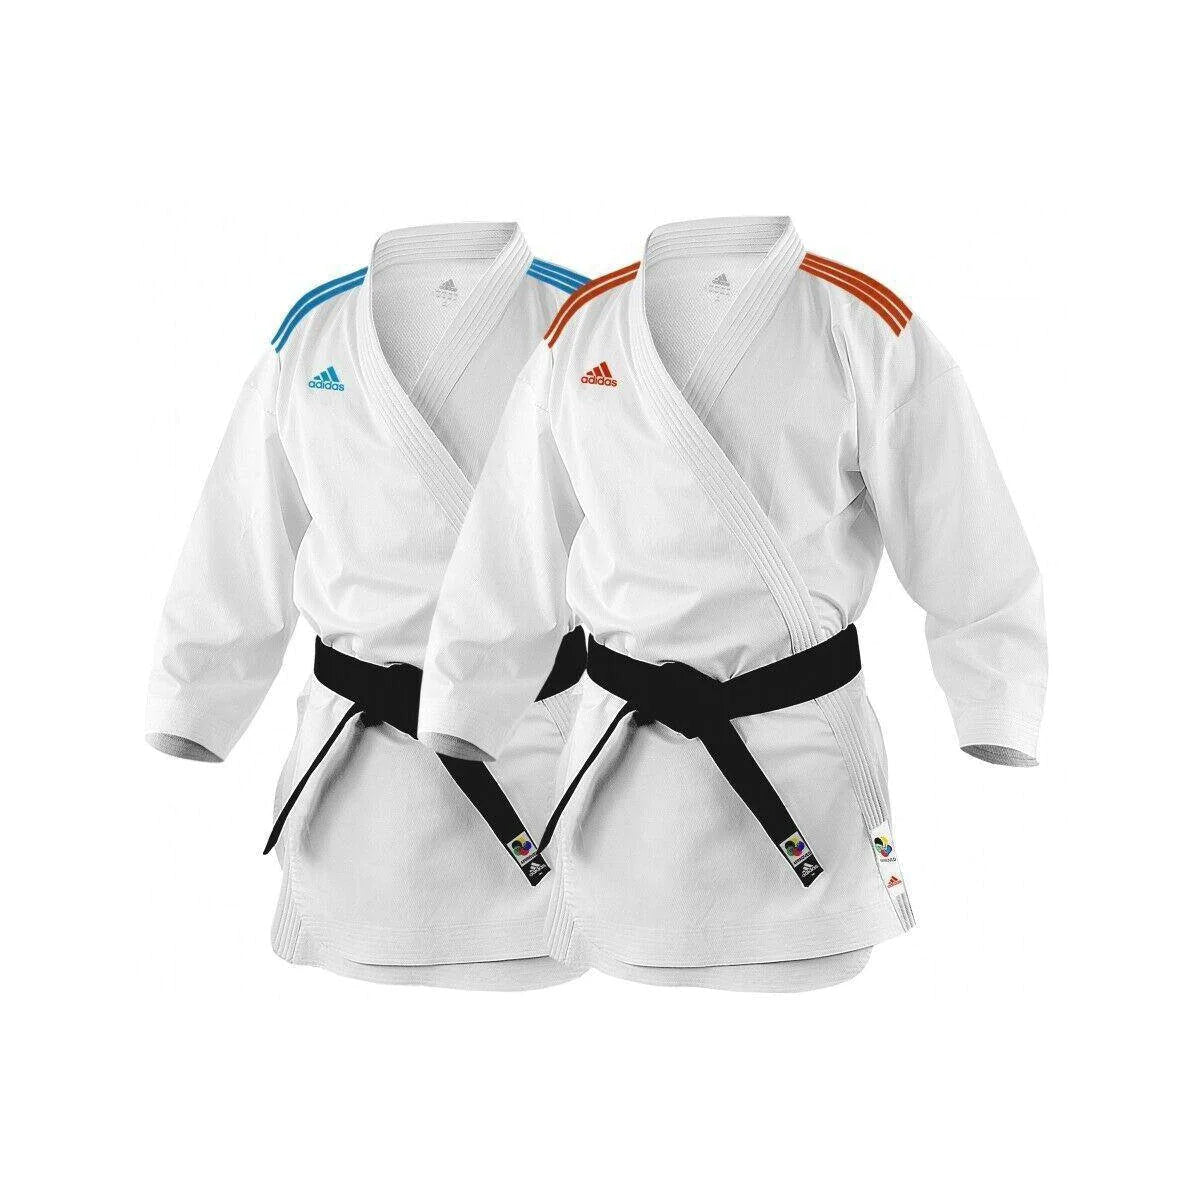 A Karate Uniform (Gi) Size, Cut & - Budo Online